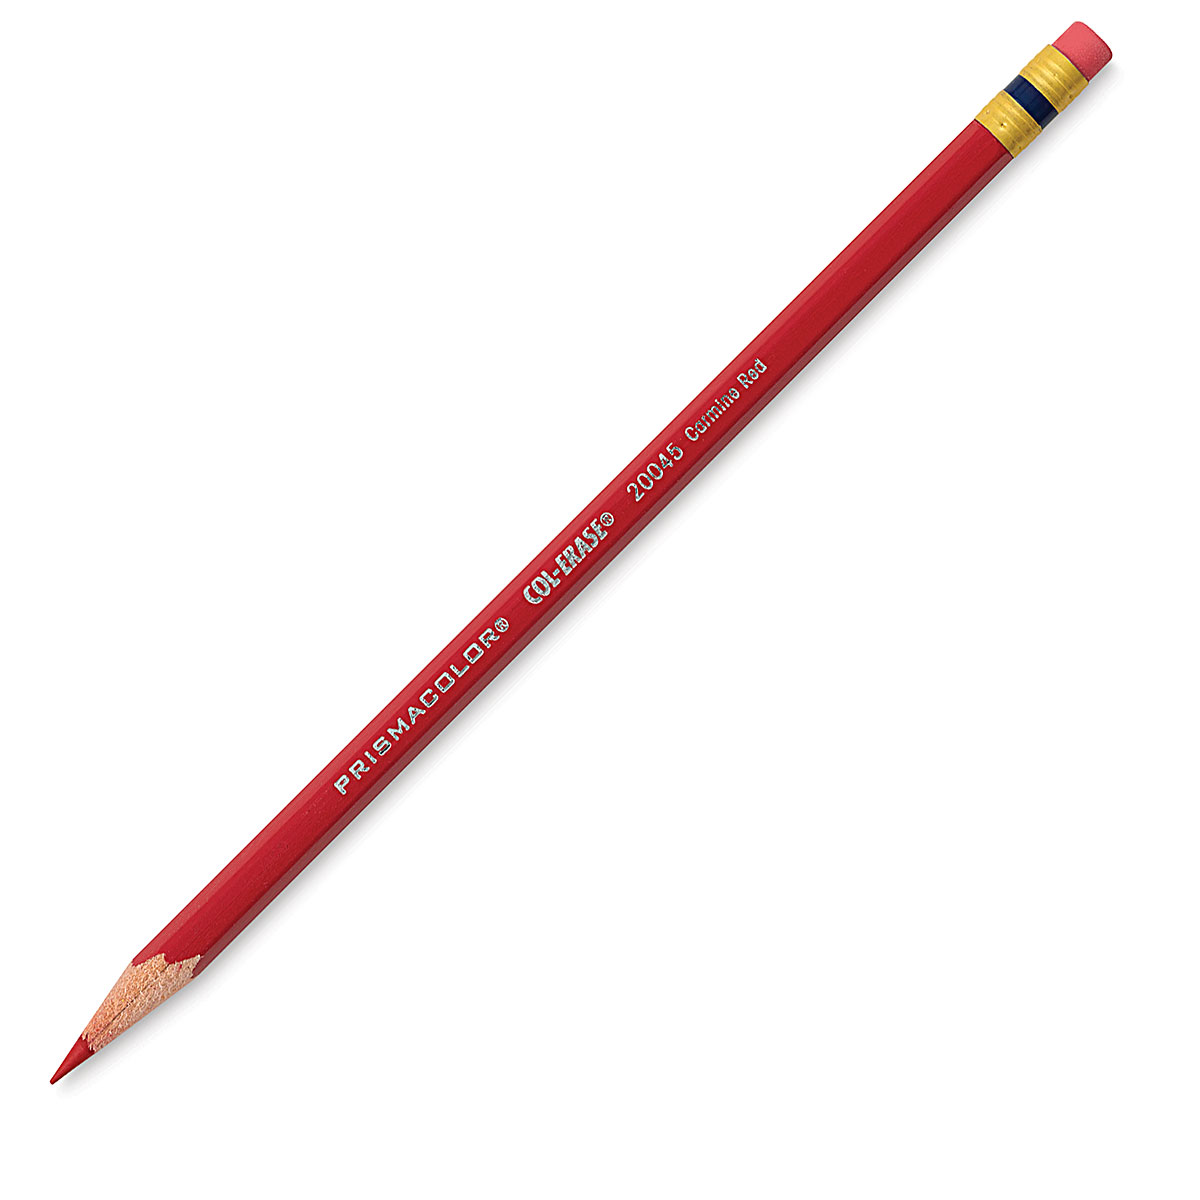 Prismacolor Col-Erase Pencil Set - Set of 12, Assorted Colors